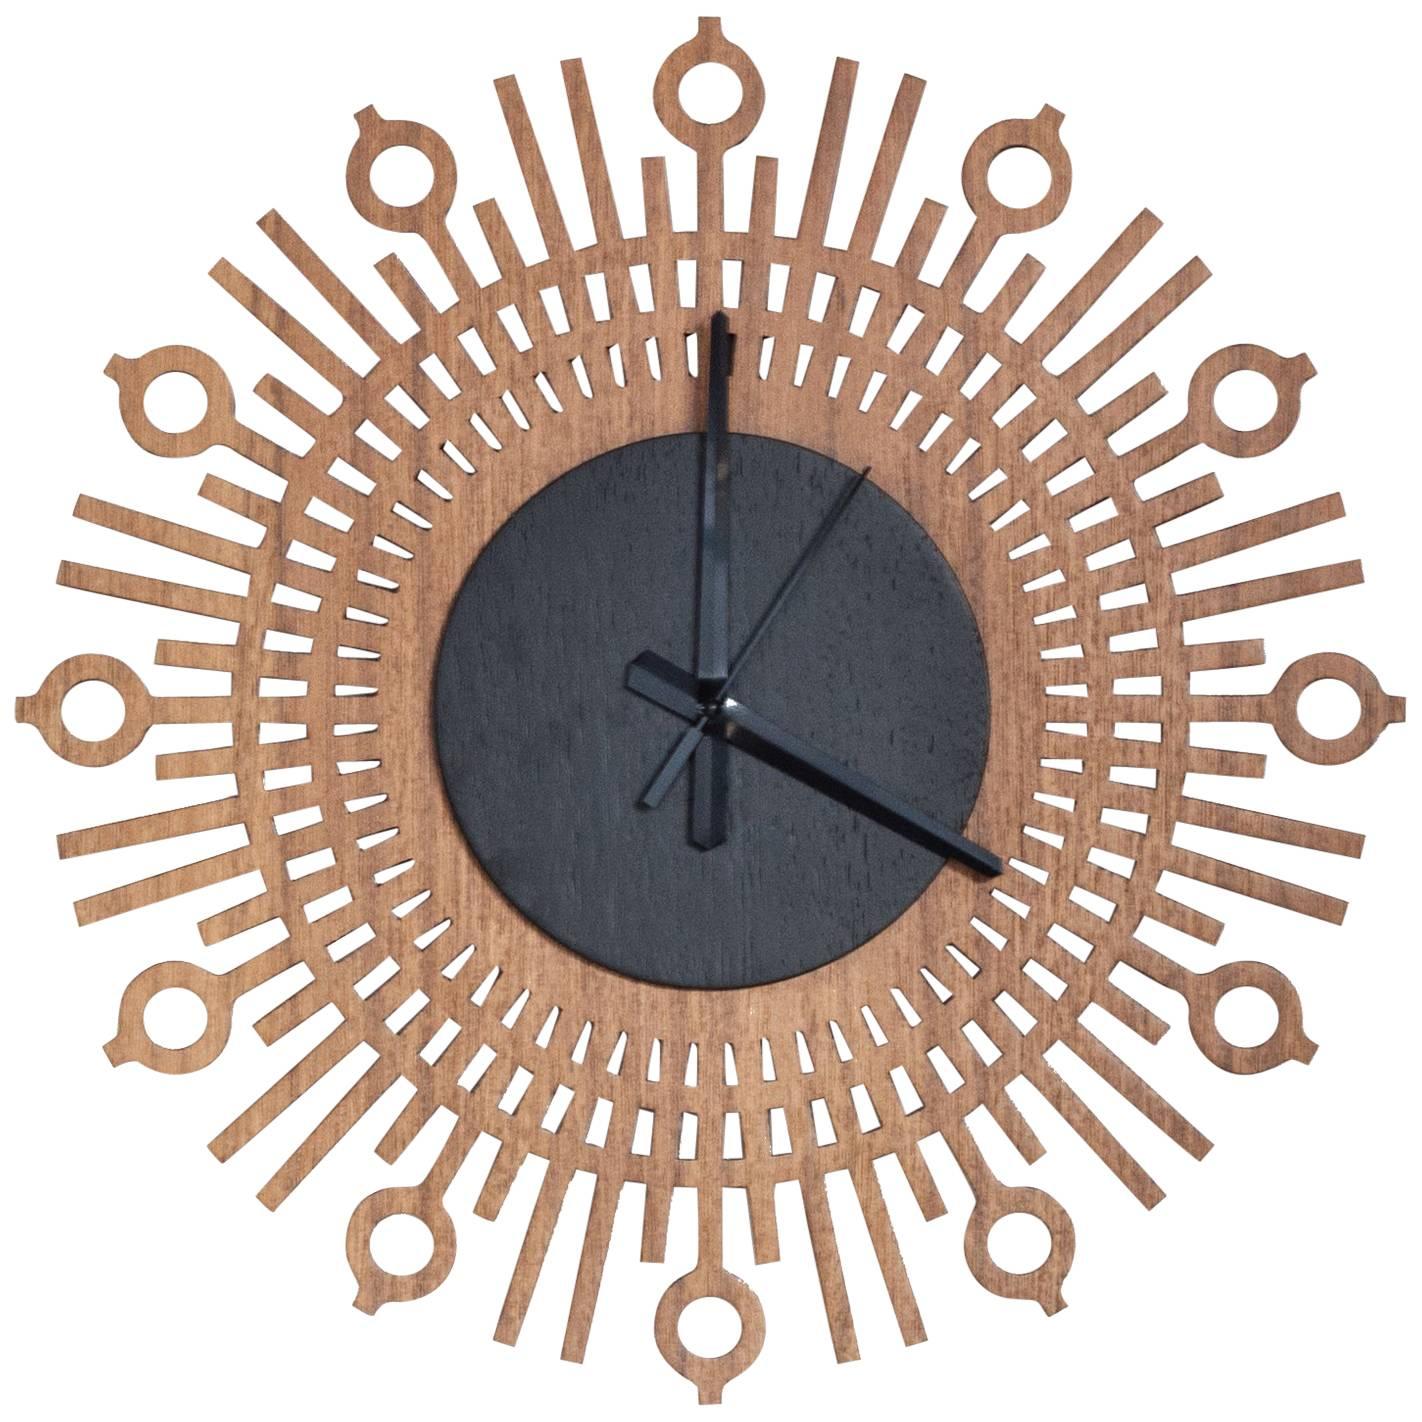 Coat Brazilian Contemporary Wood Wall Clock by Lattoog